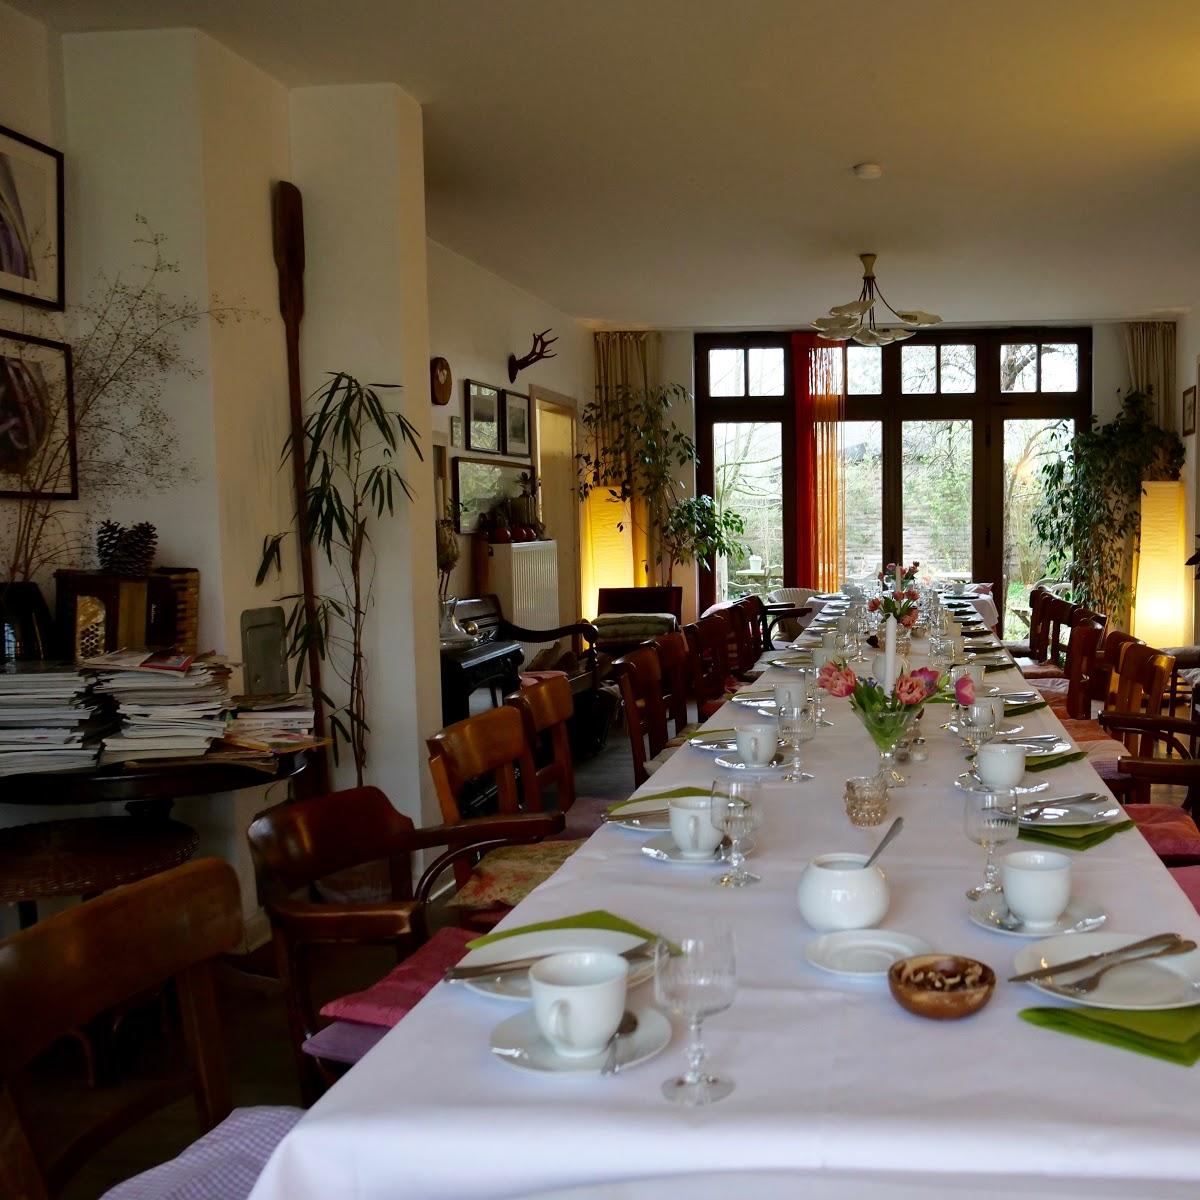 Restaurant "Café Schmidthausen" in Kleve